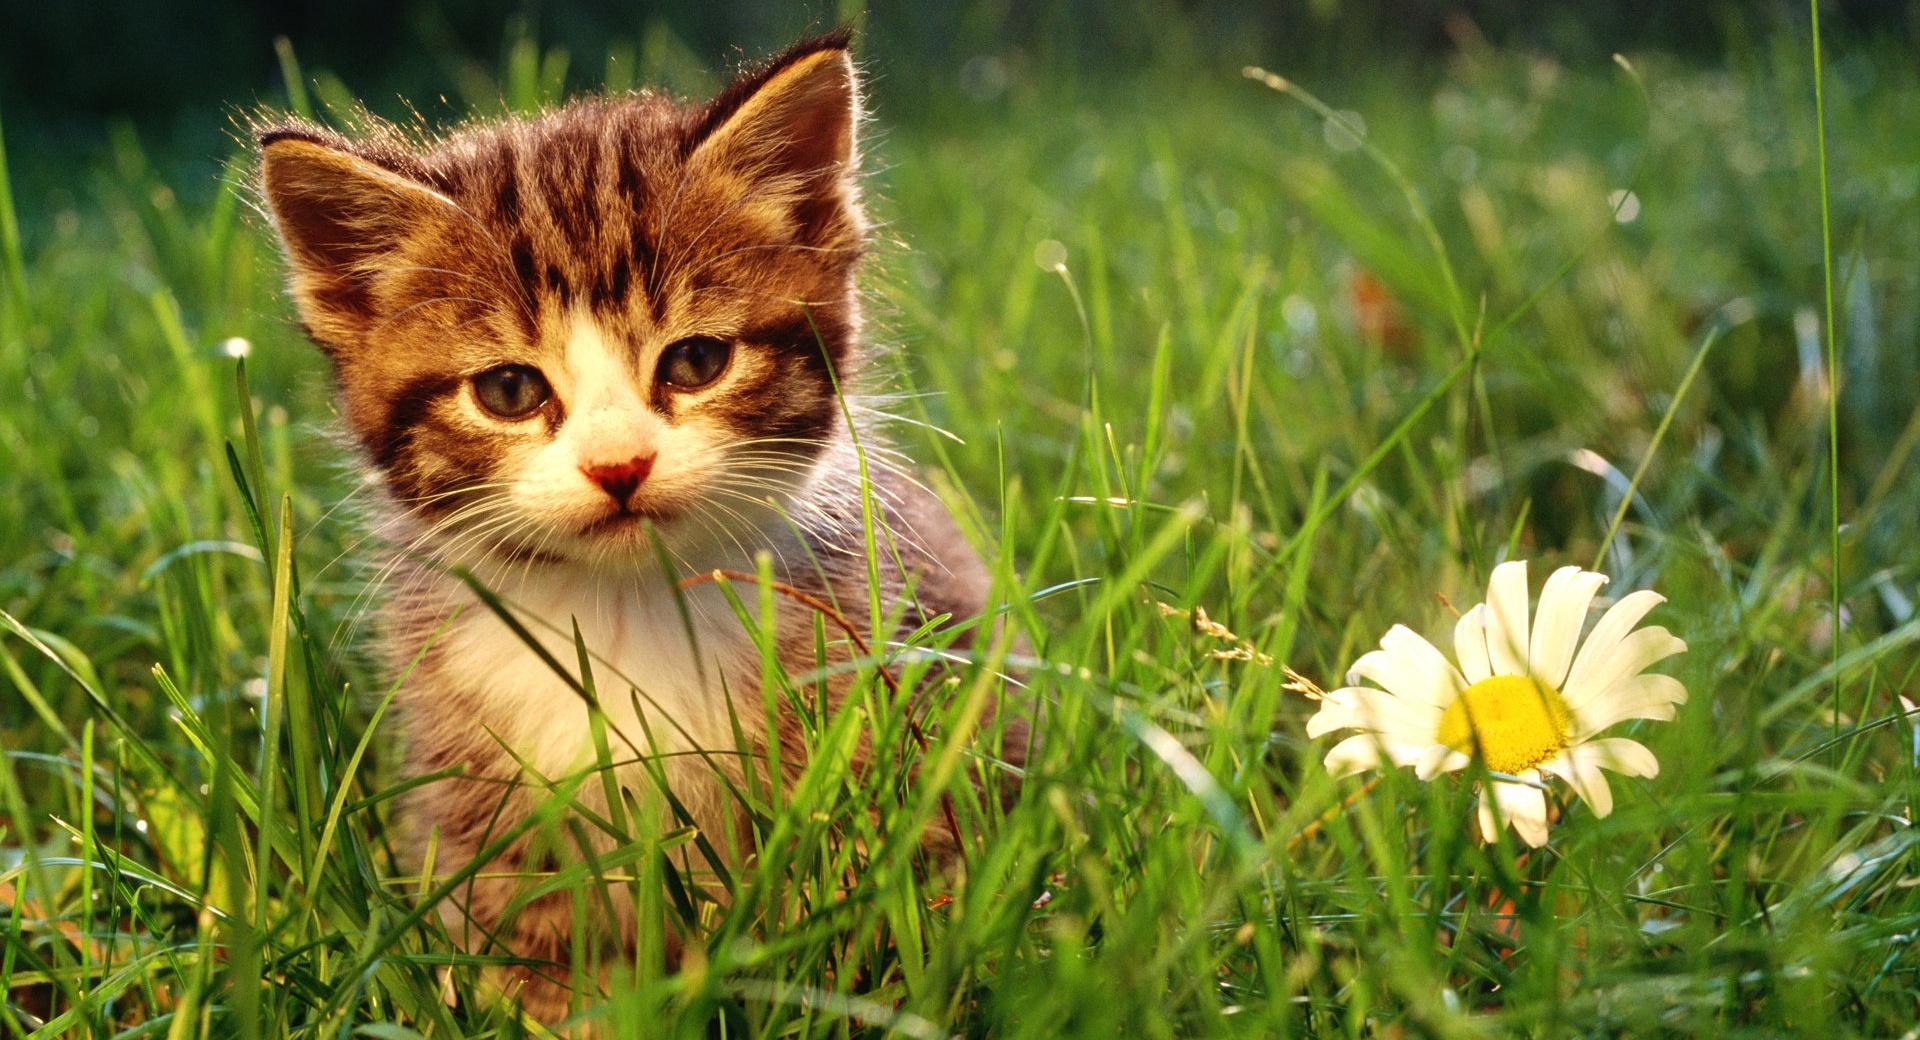 Cute Kitten Near A Flower at 1024 x 1024 iPad size wallpapers HD quality